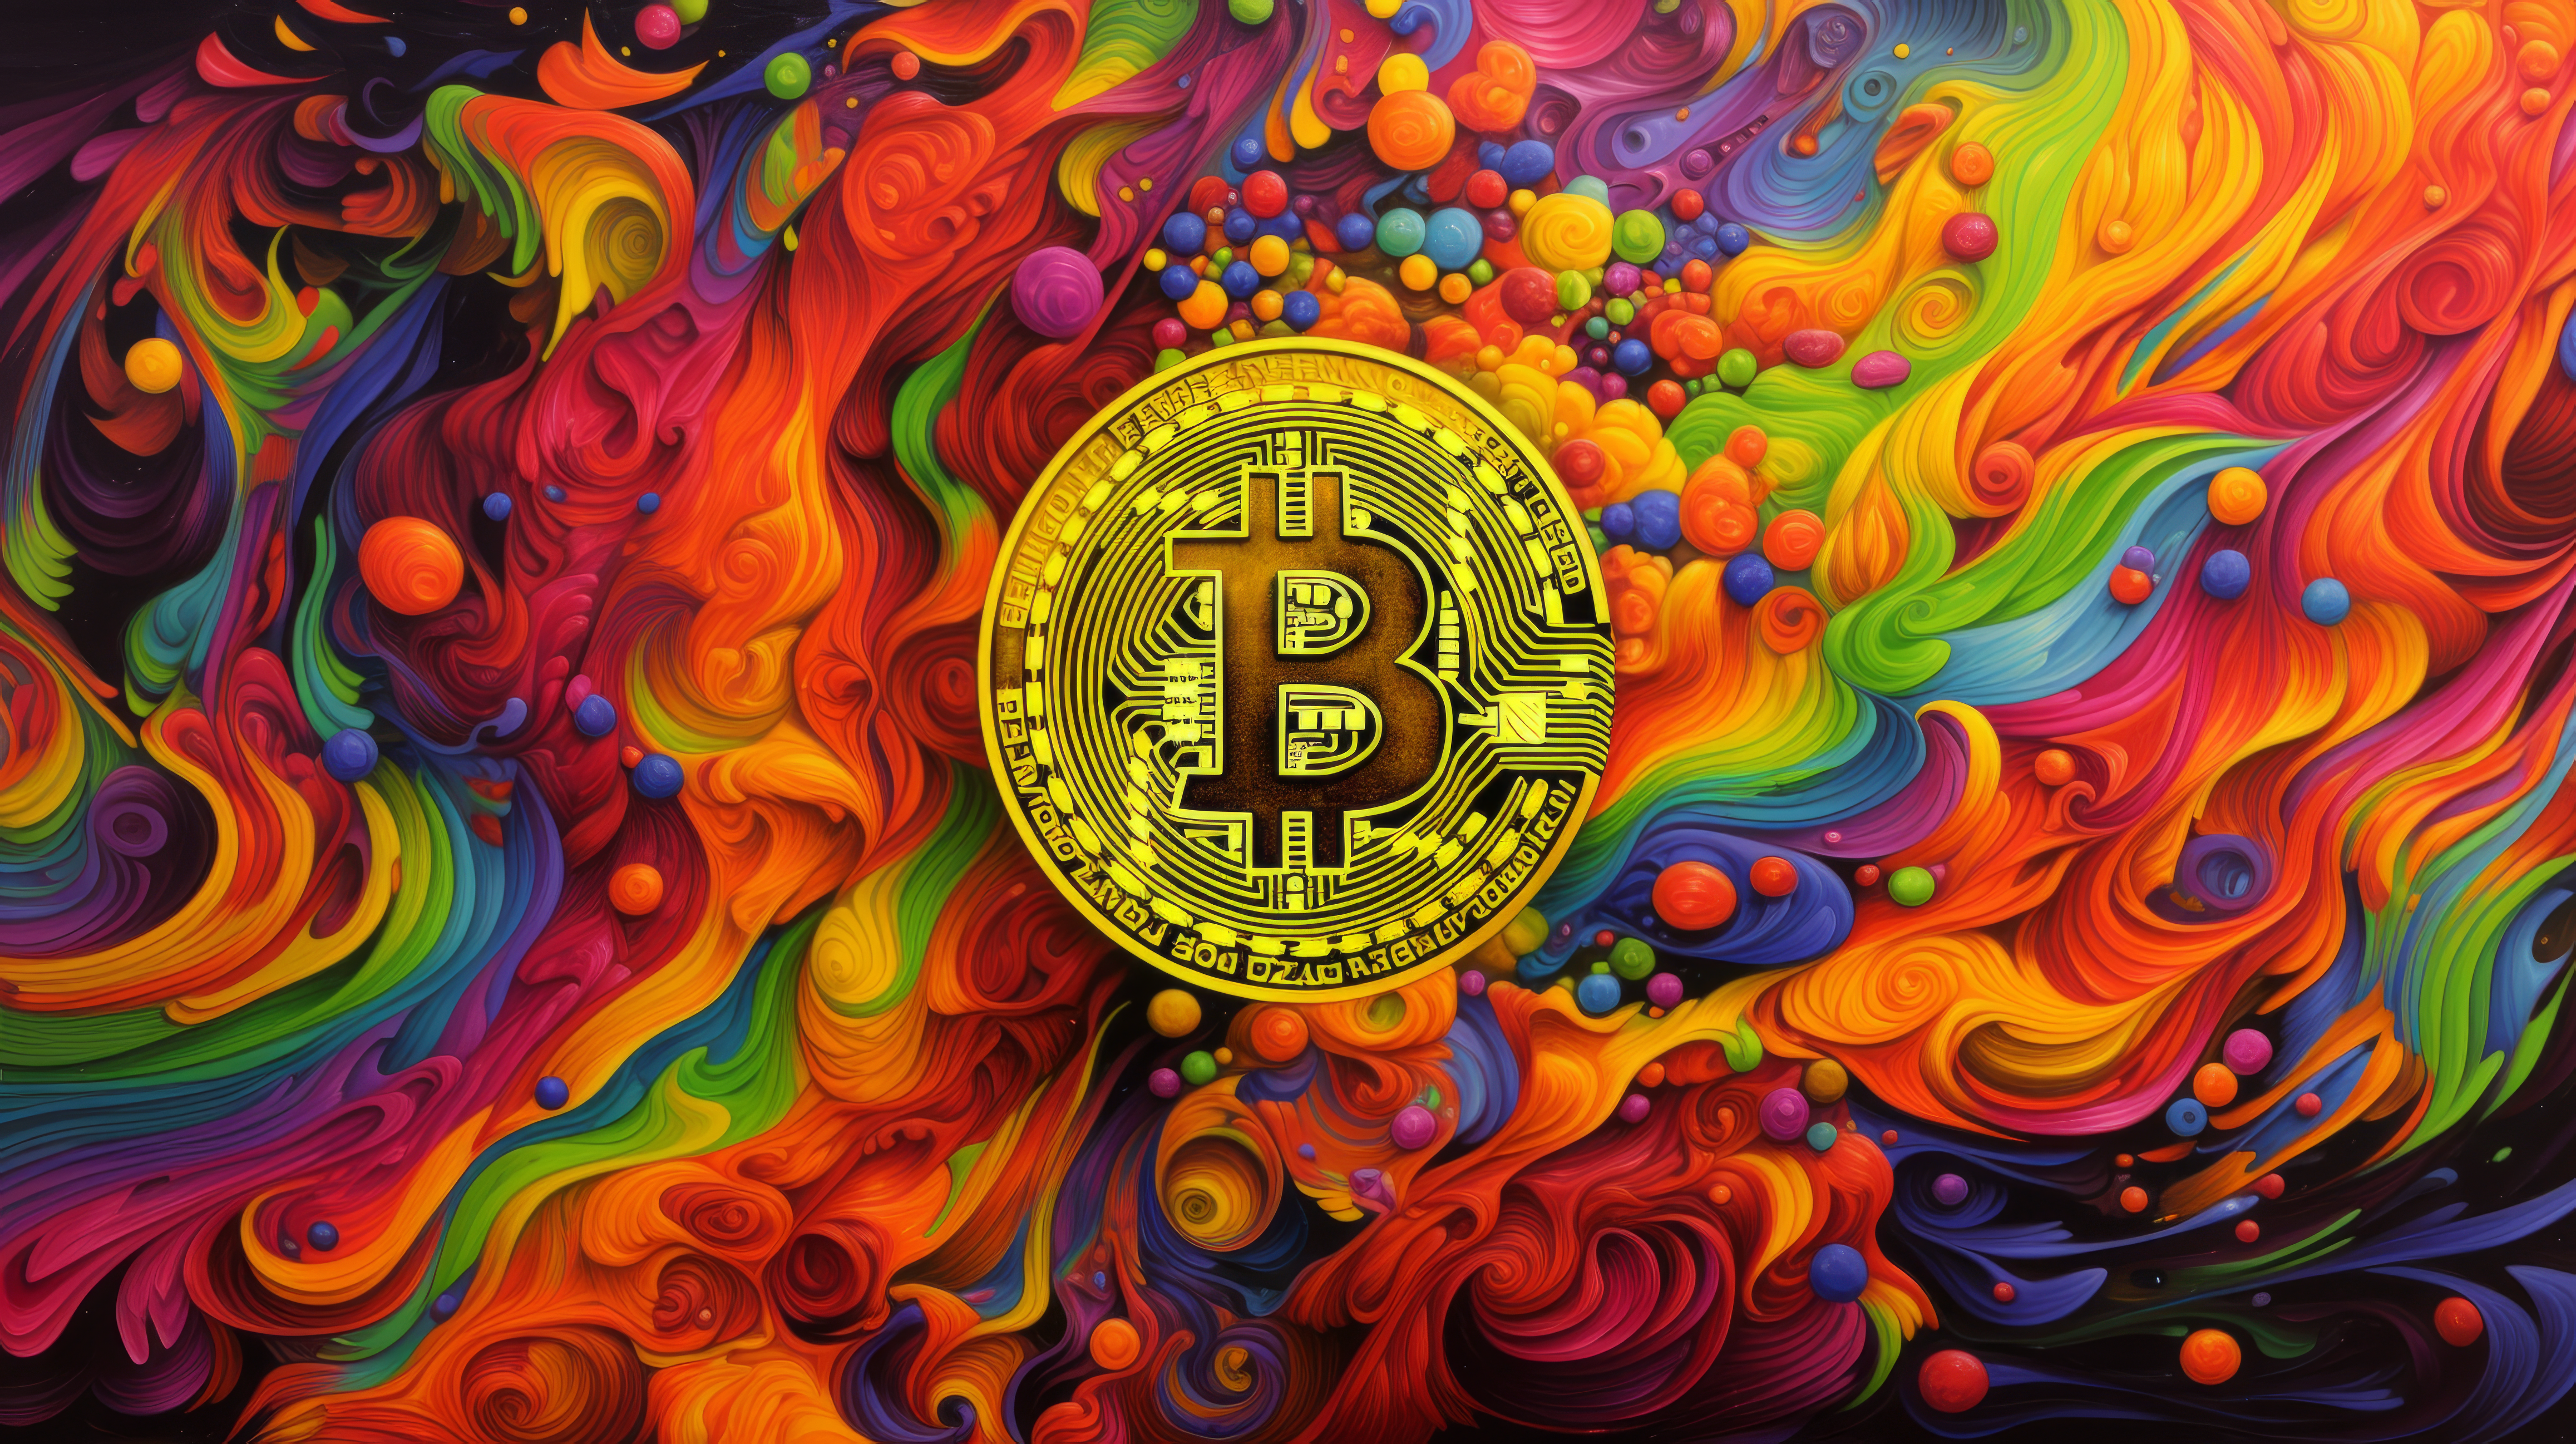 Bitcoin Psychedelic Art Wallpaper By Patrika